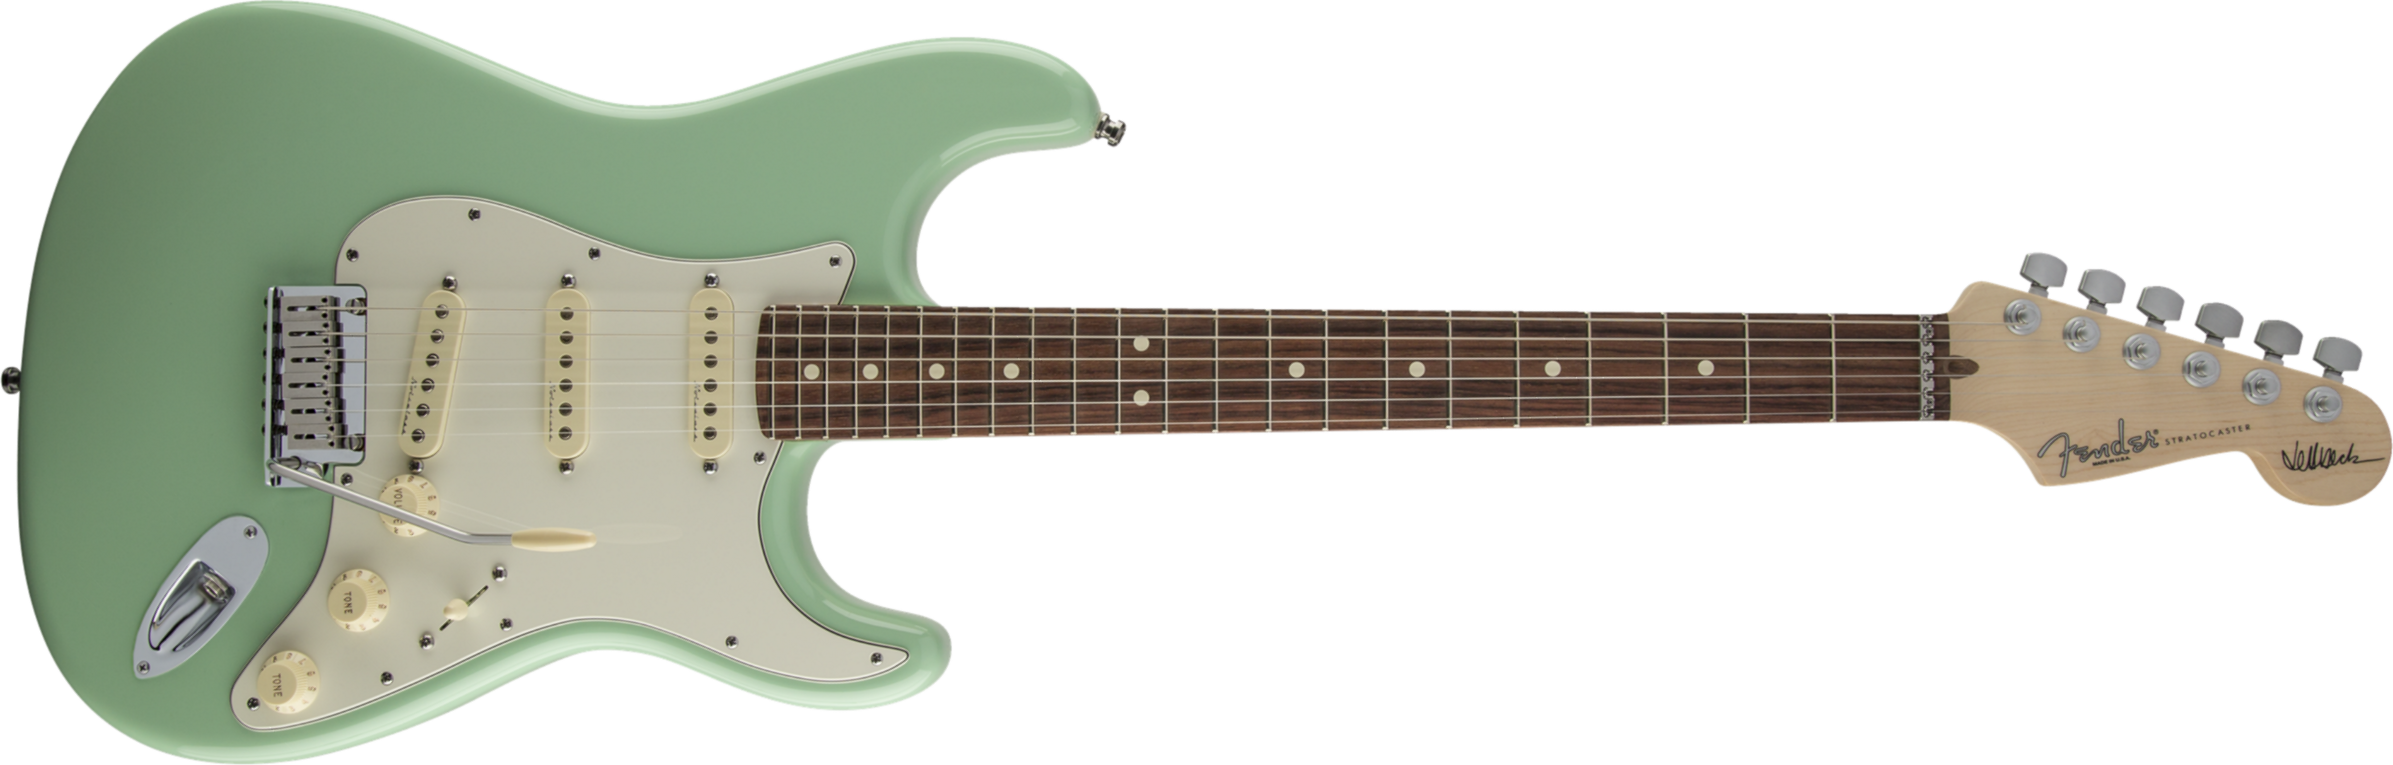 Fender Stratocaster Jeff Beck - Surf Green - E-Gitarre in Str-Form - Main picture